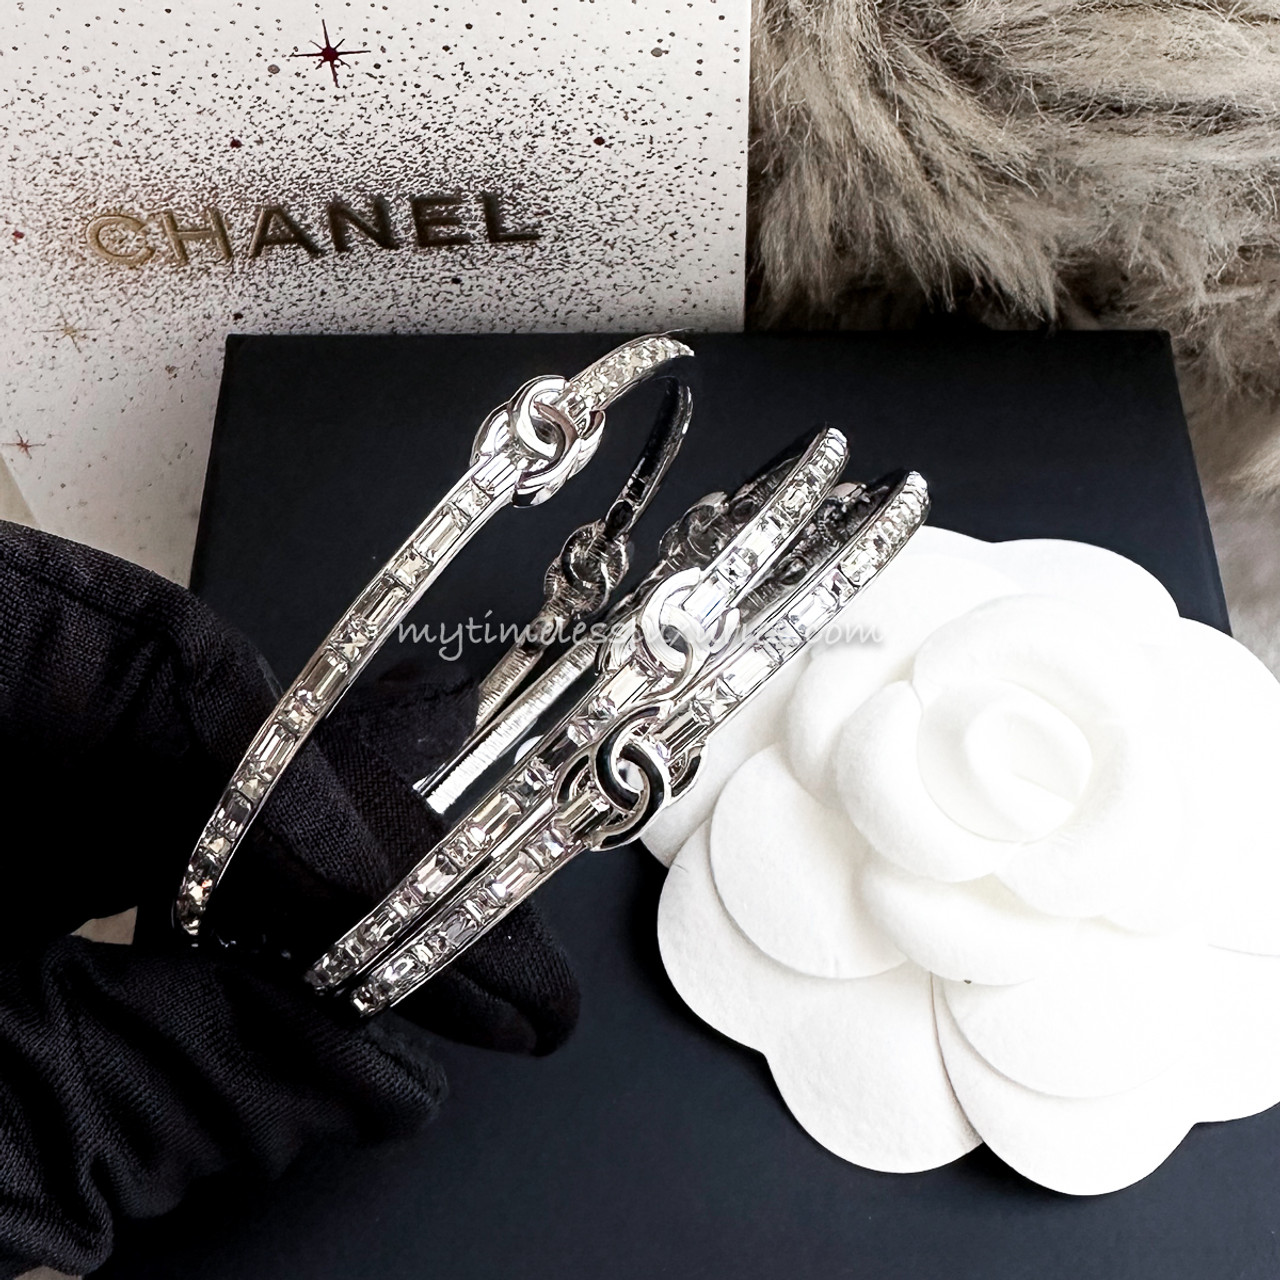 Chanel Crystal top handle real vs rep : r/WagoonLadies